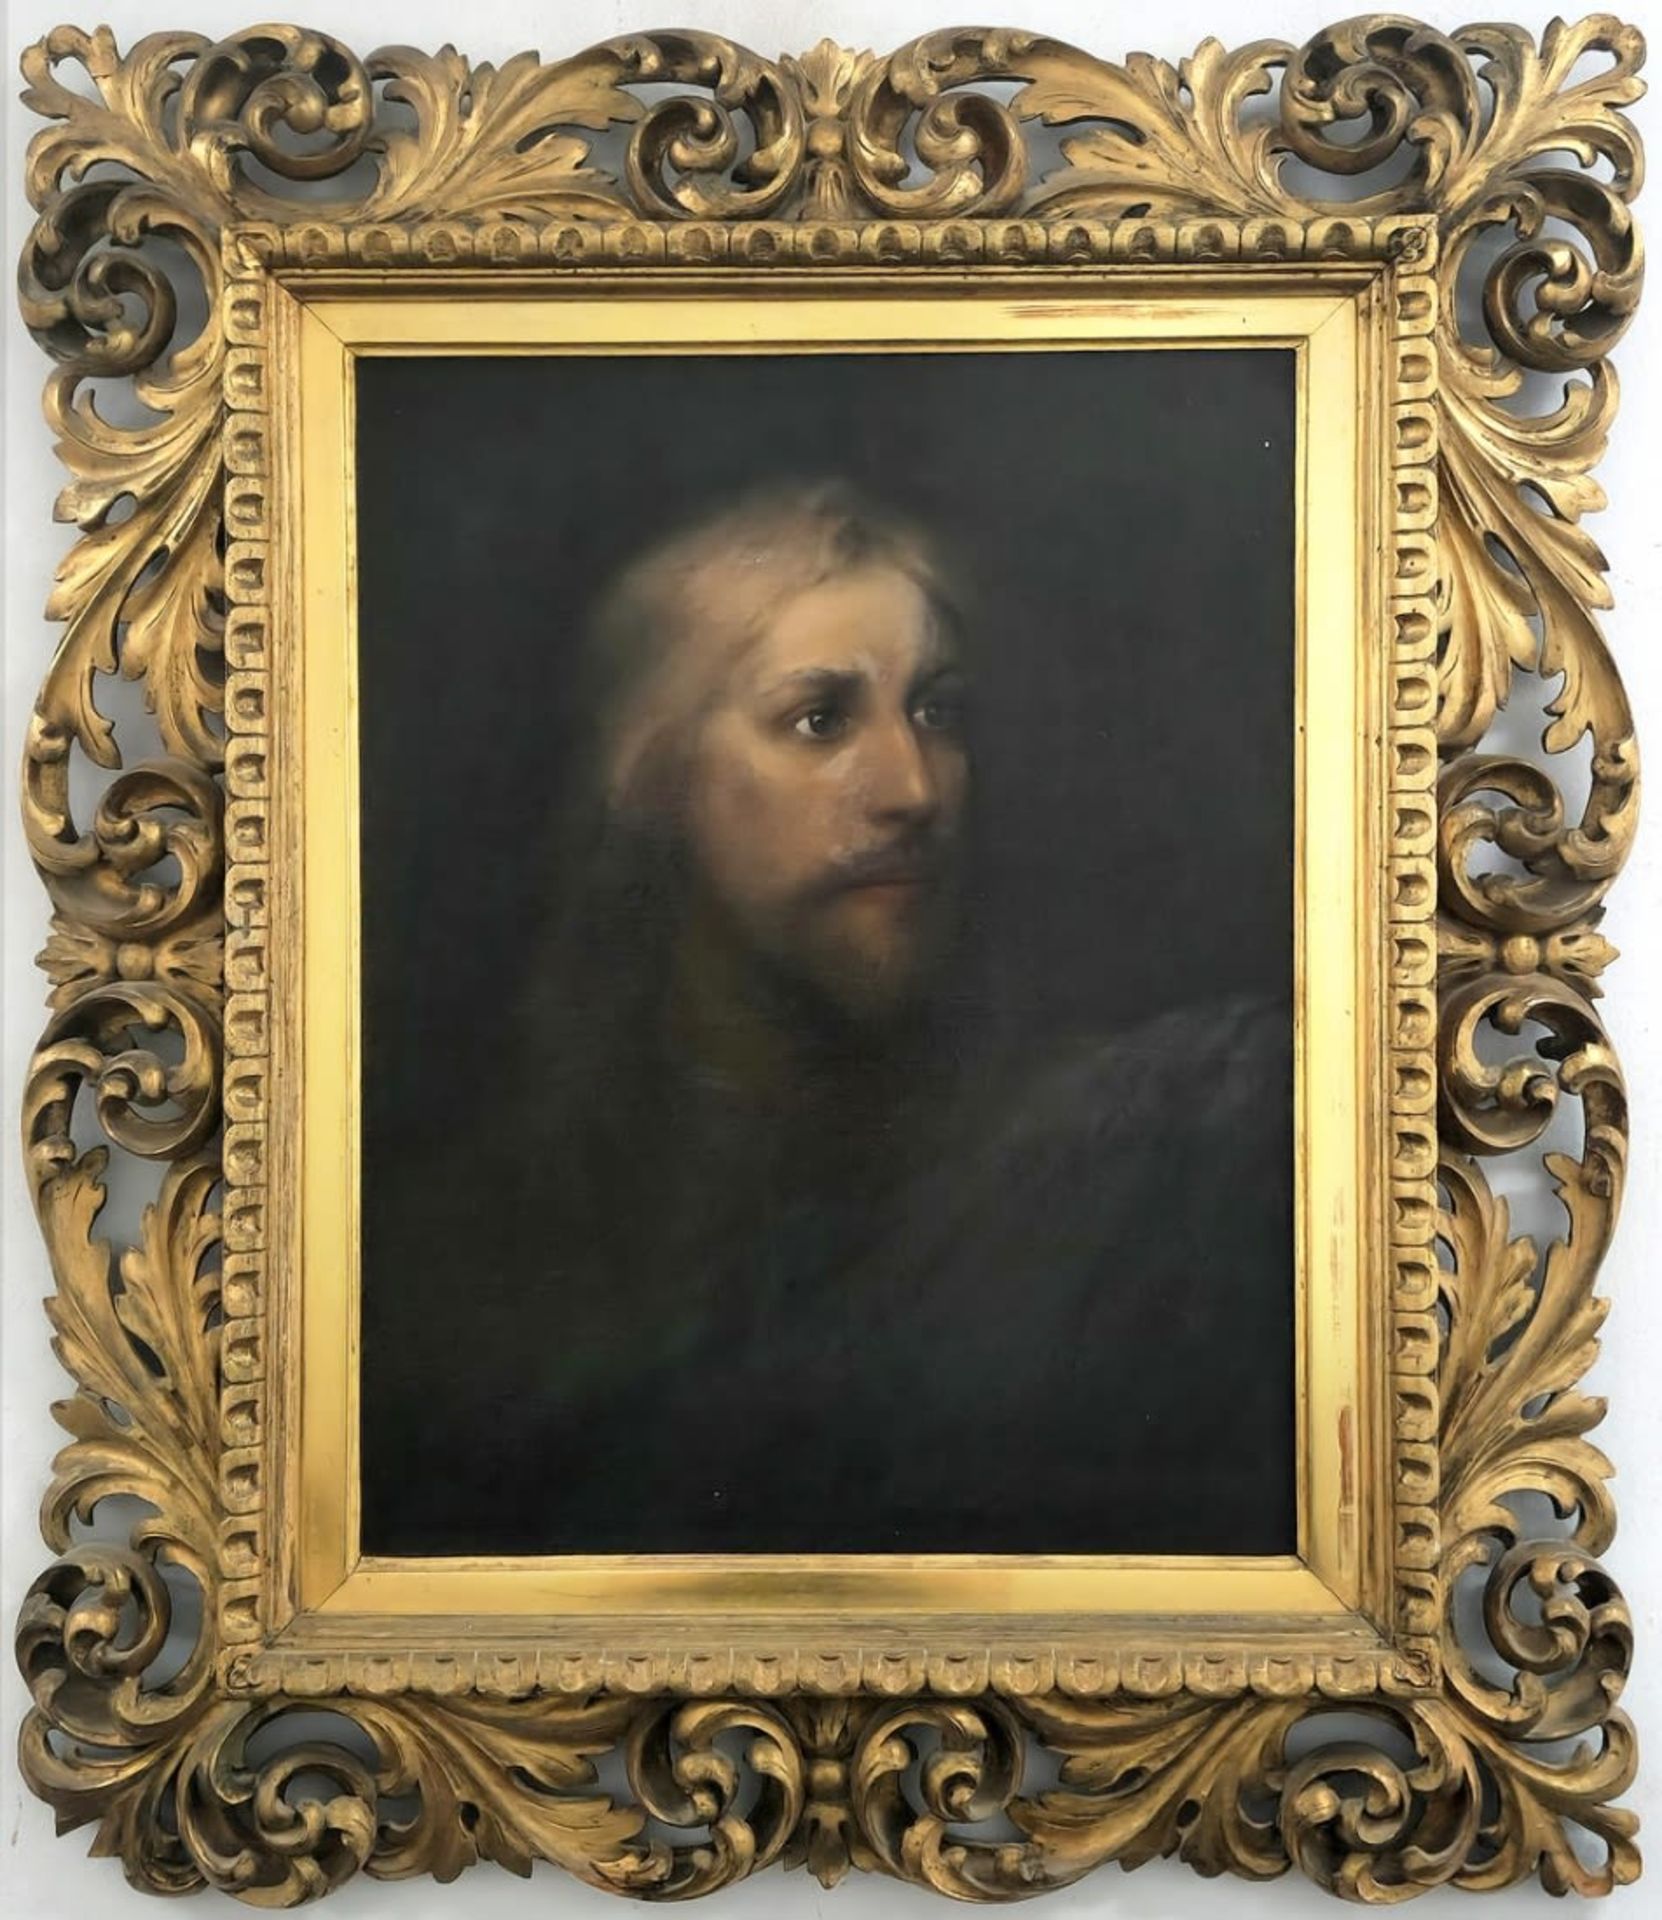 Gabriel Cornelius Von Max - 'Jesus' -, czech painter, 1840-1915,oil on canvas, signed,